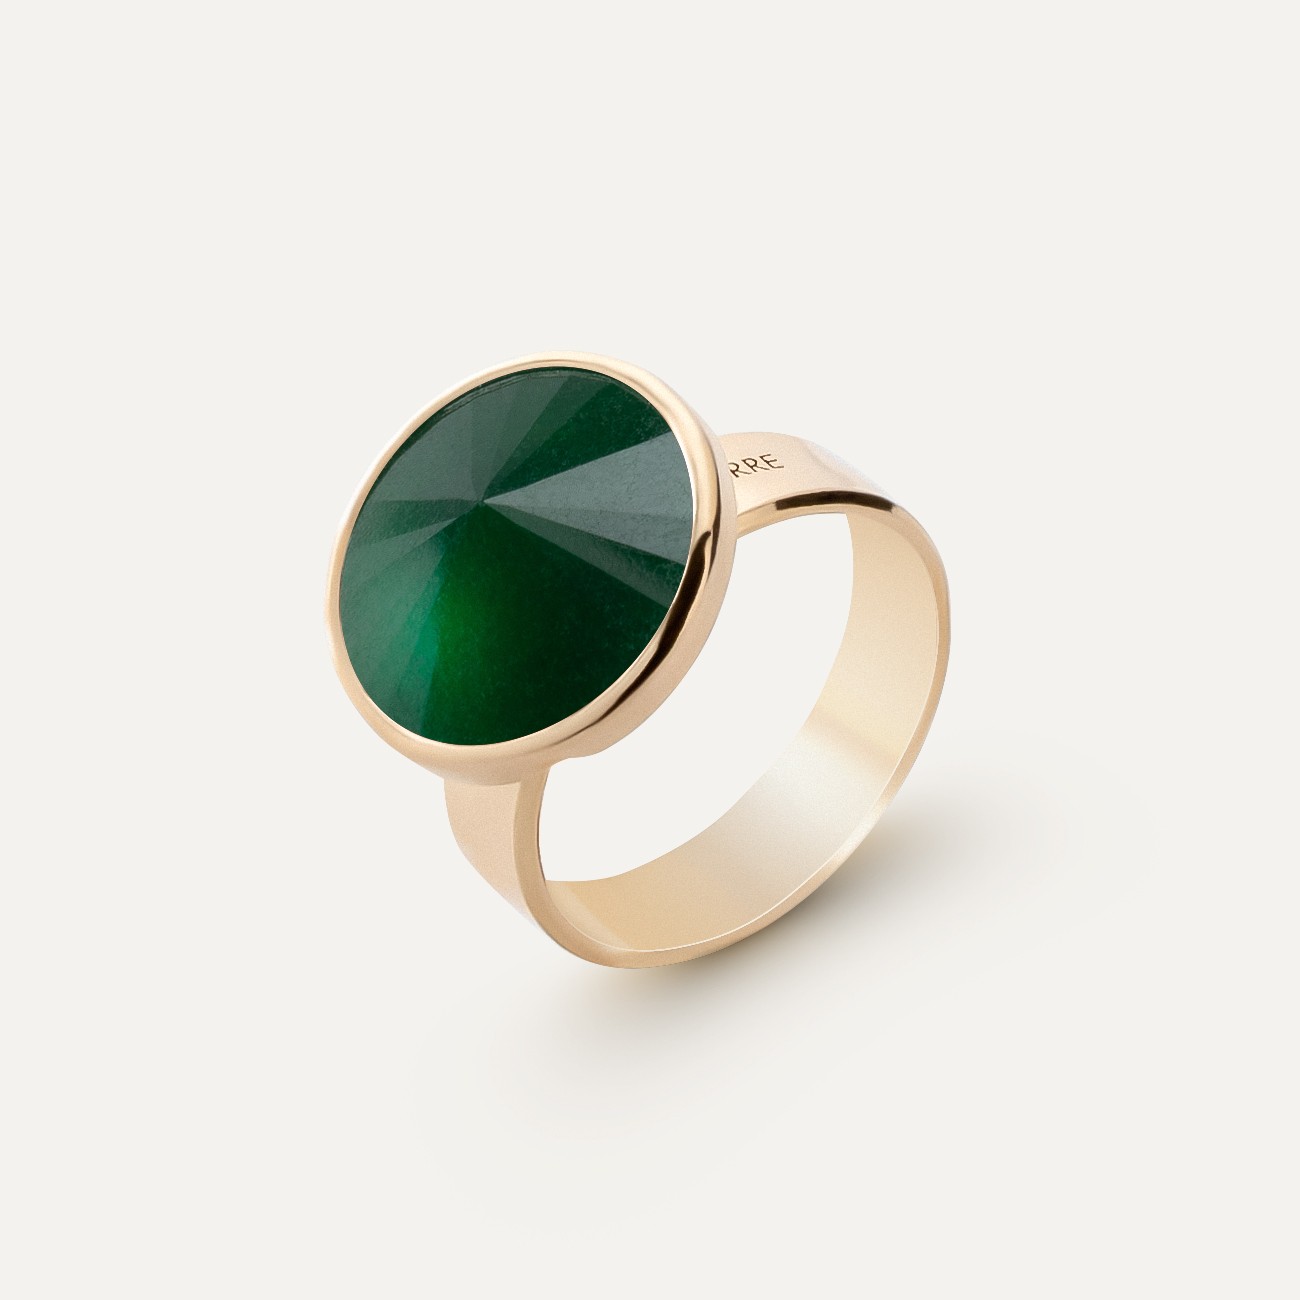 Ring with round natural stone jadeite, 925